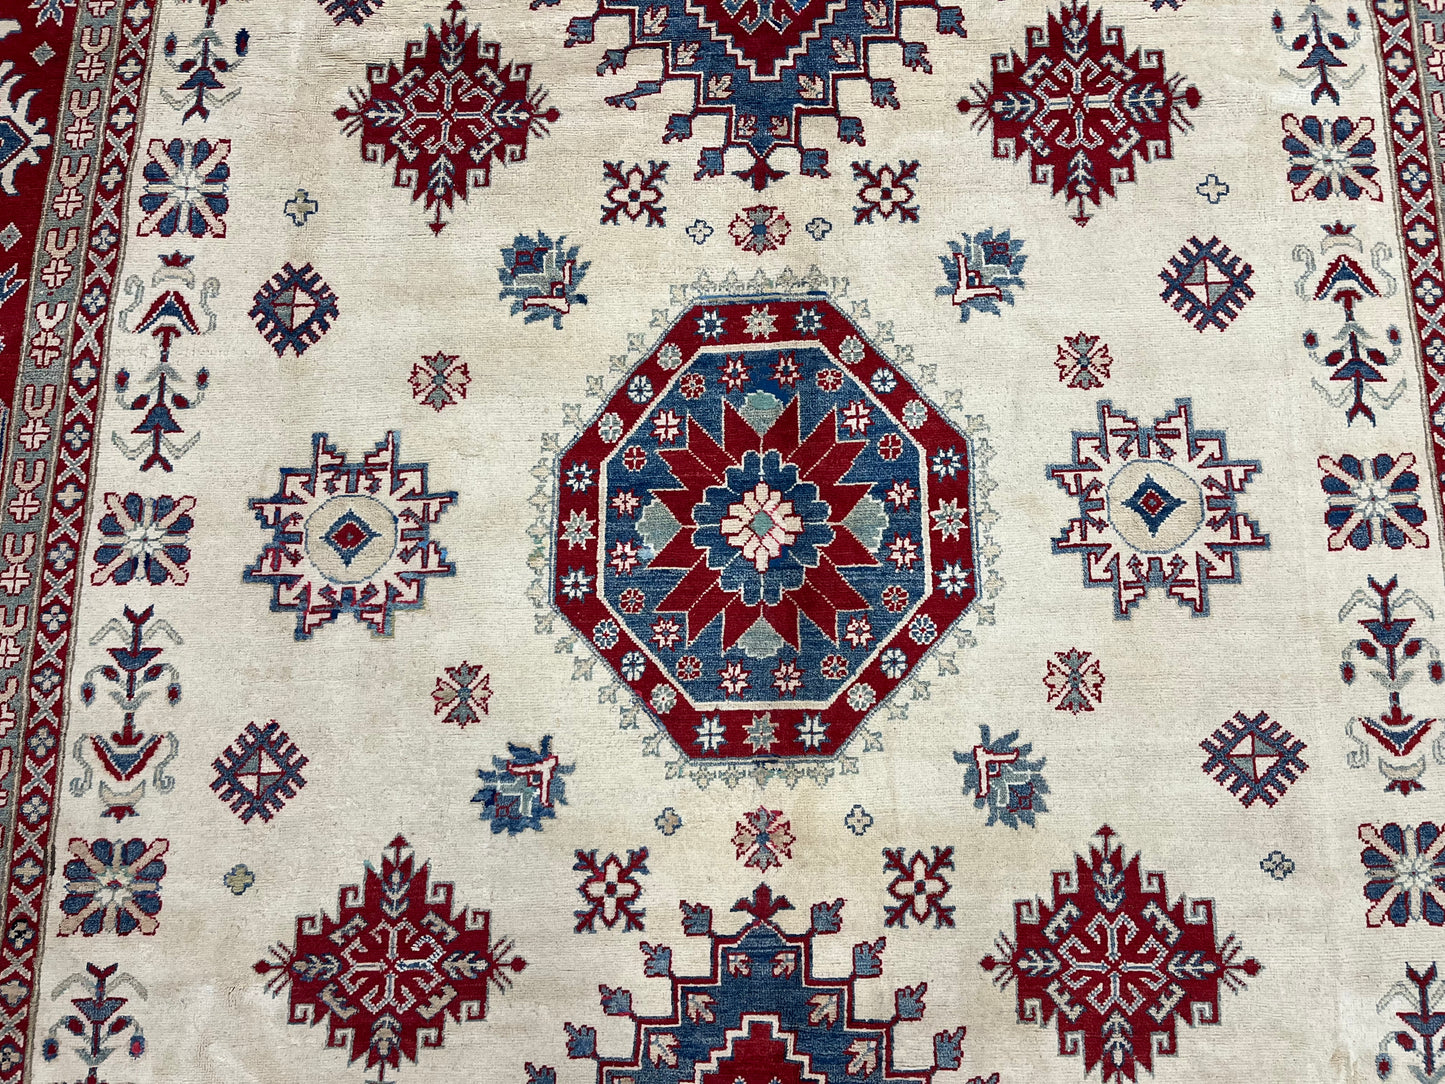 Kazak Beige 9X12 Handmade Wool Rug # 13737